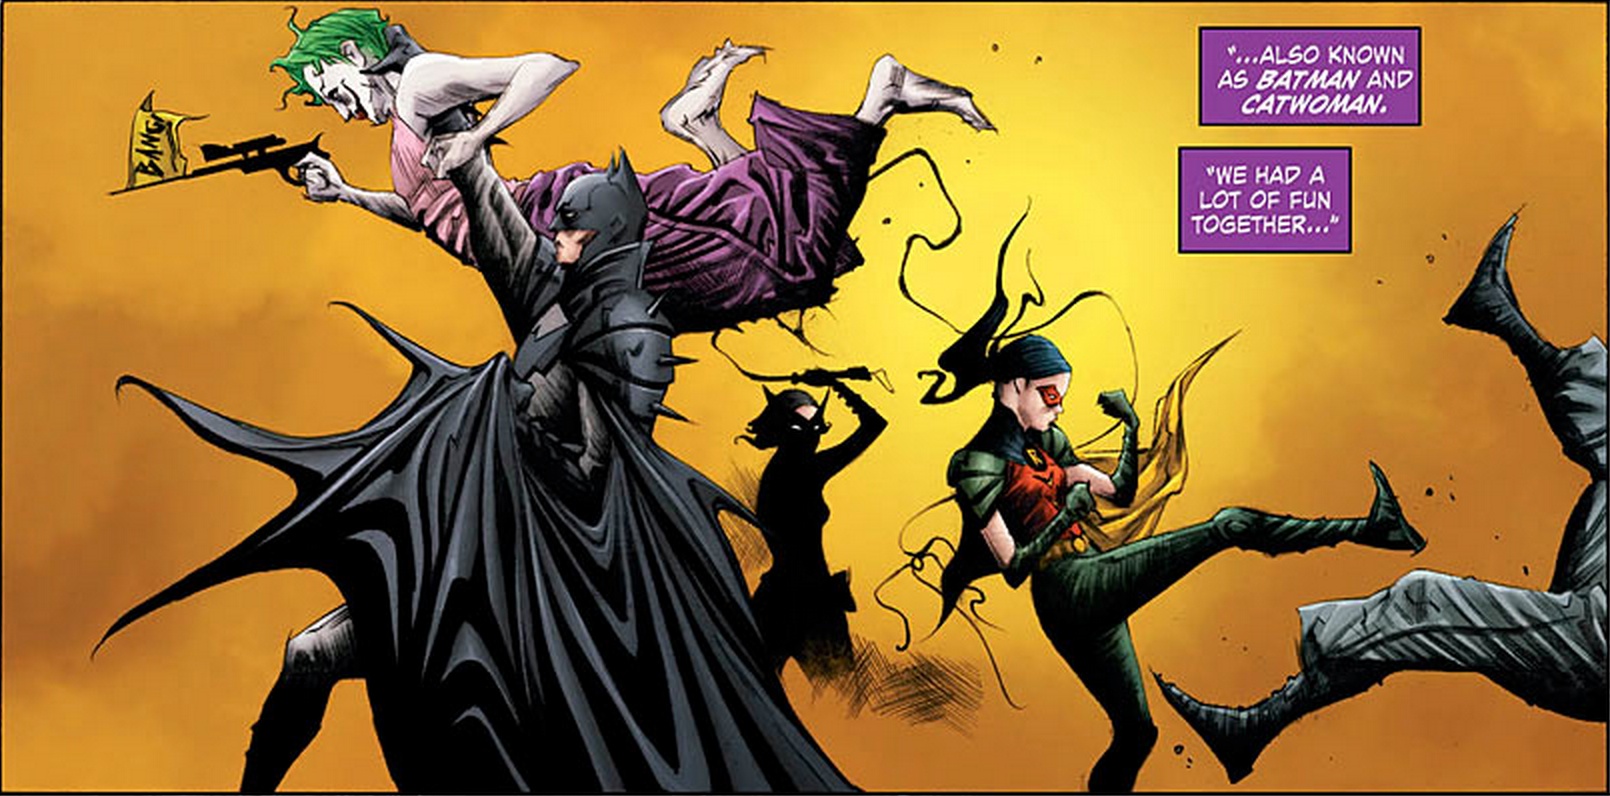 Earth Batman Catwoman And Robin Vs Joker